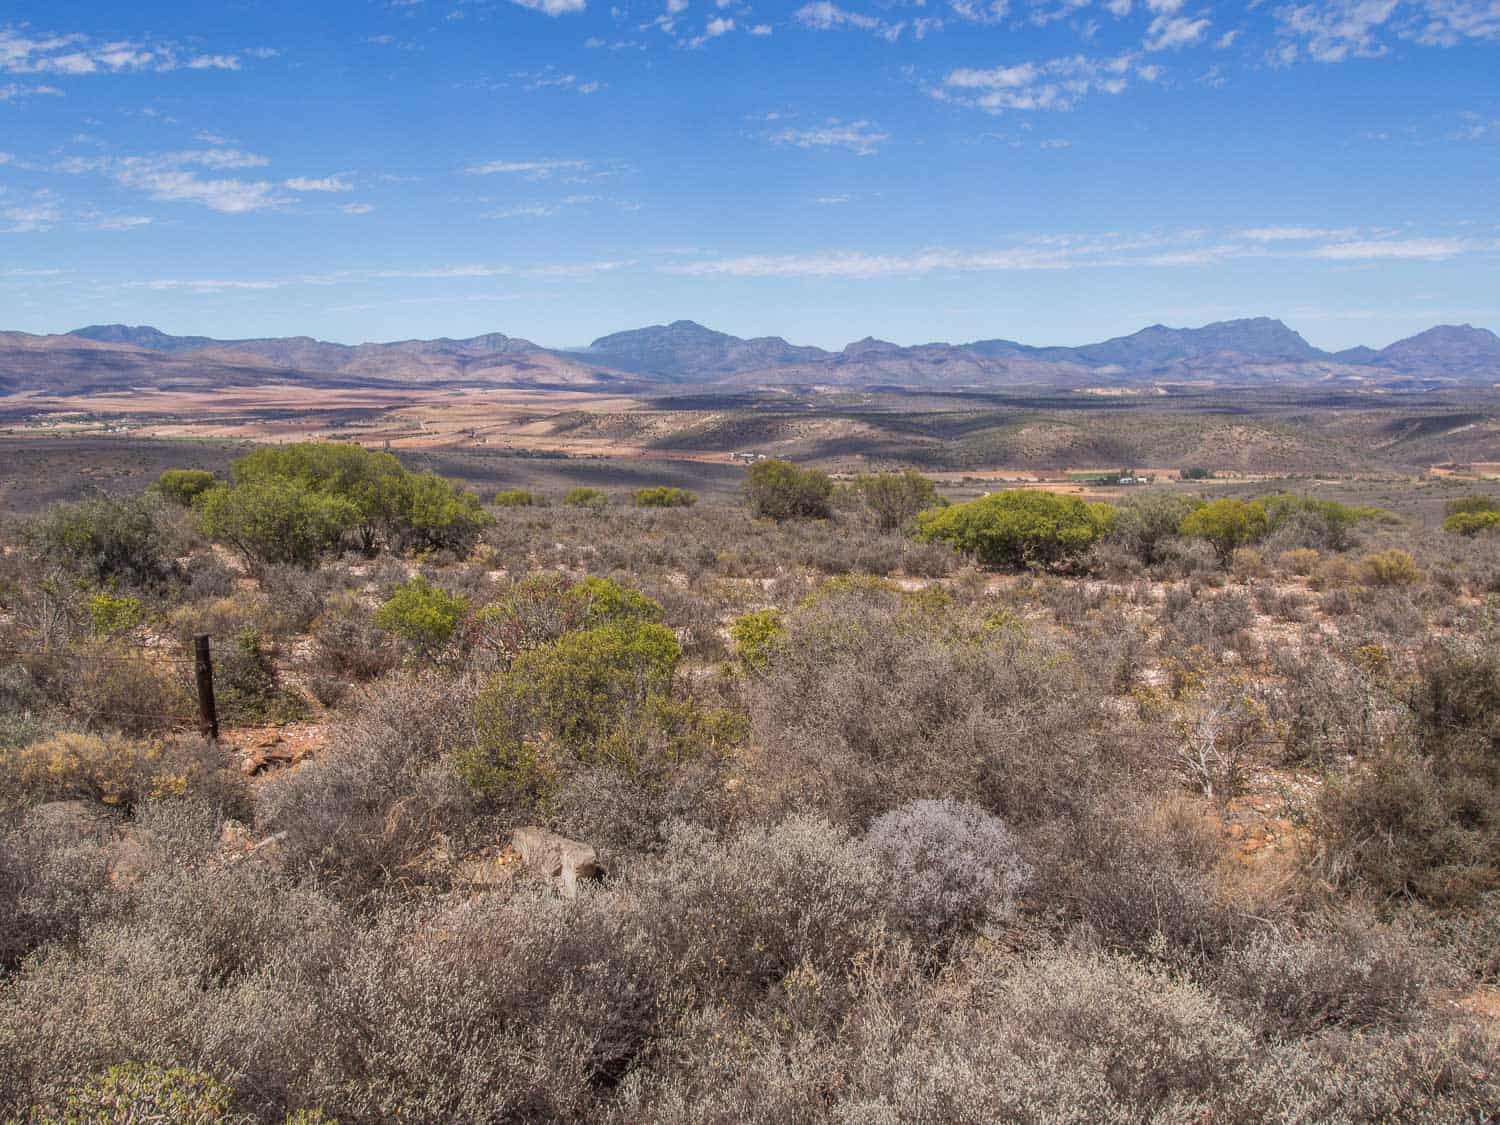 Oudtshoorn semi-desert landscape in South Africa's Klein Karoo